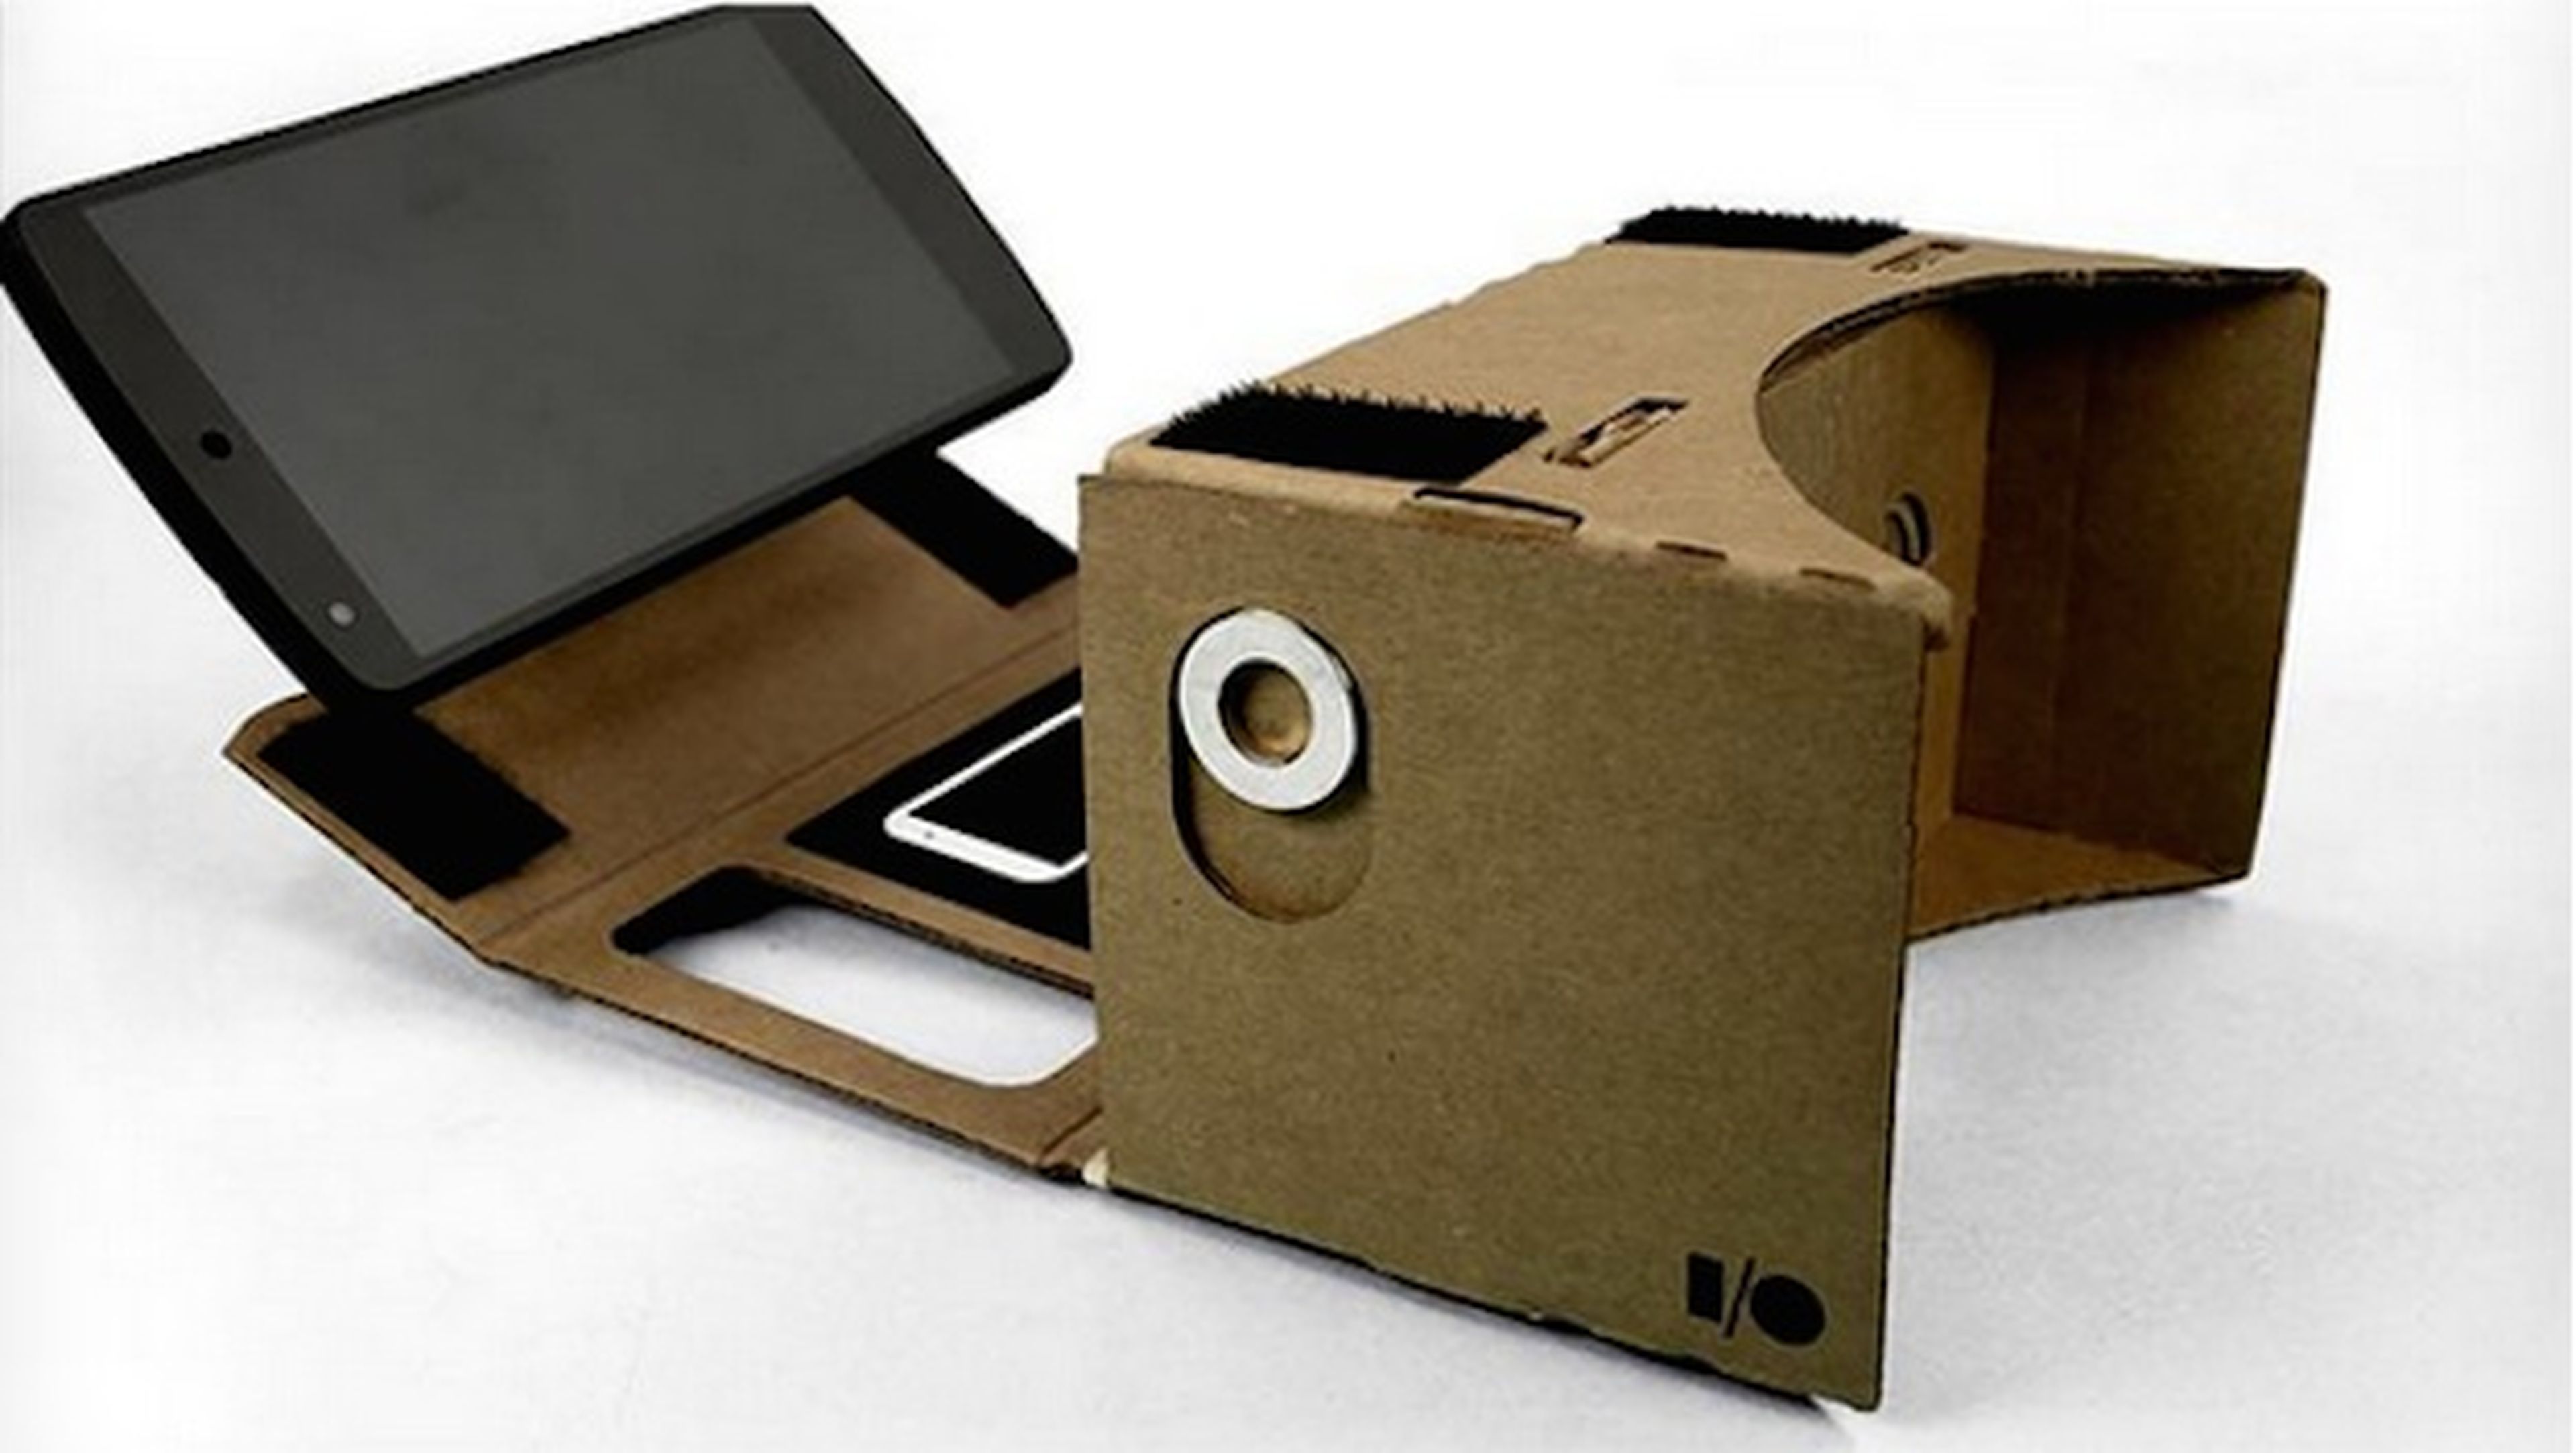 Cardboard, regalo inesperado en Google I/O 2014